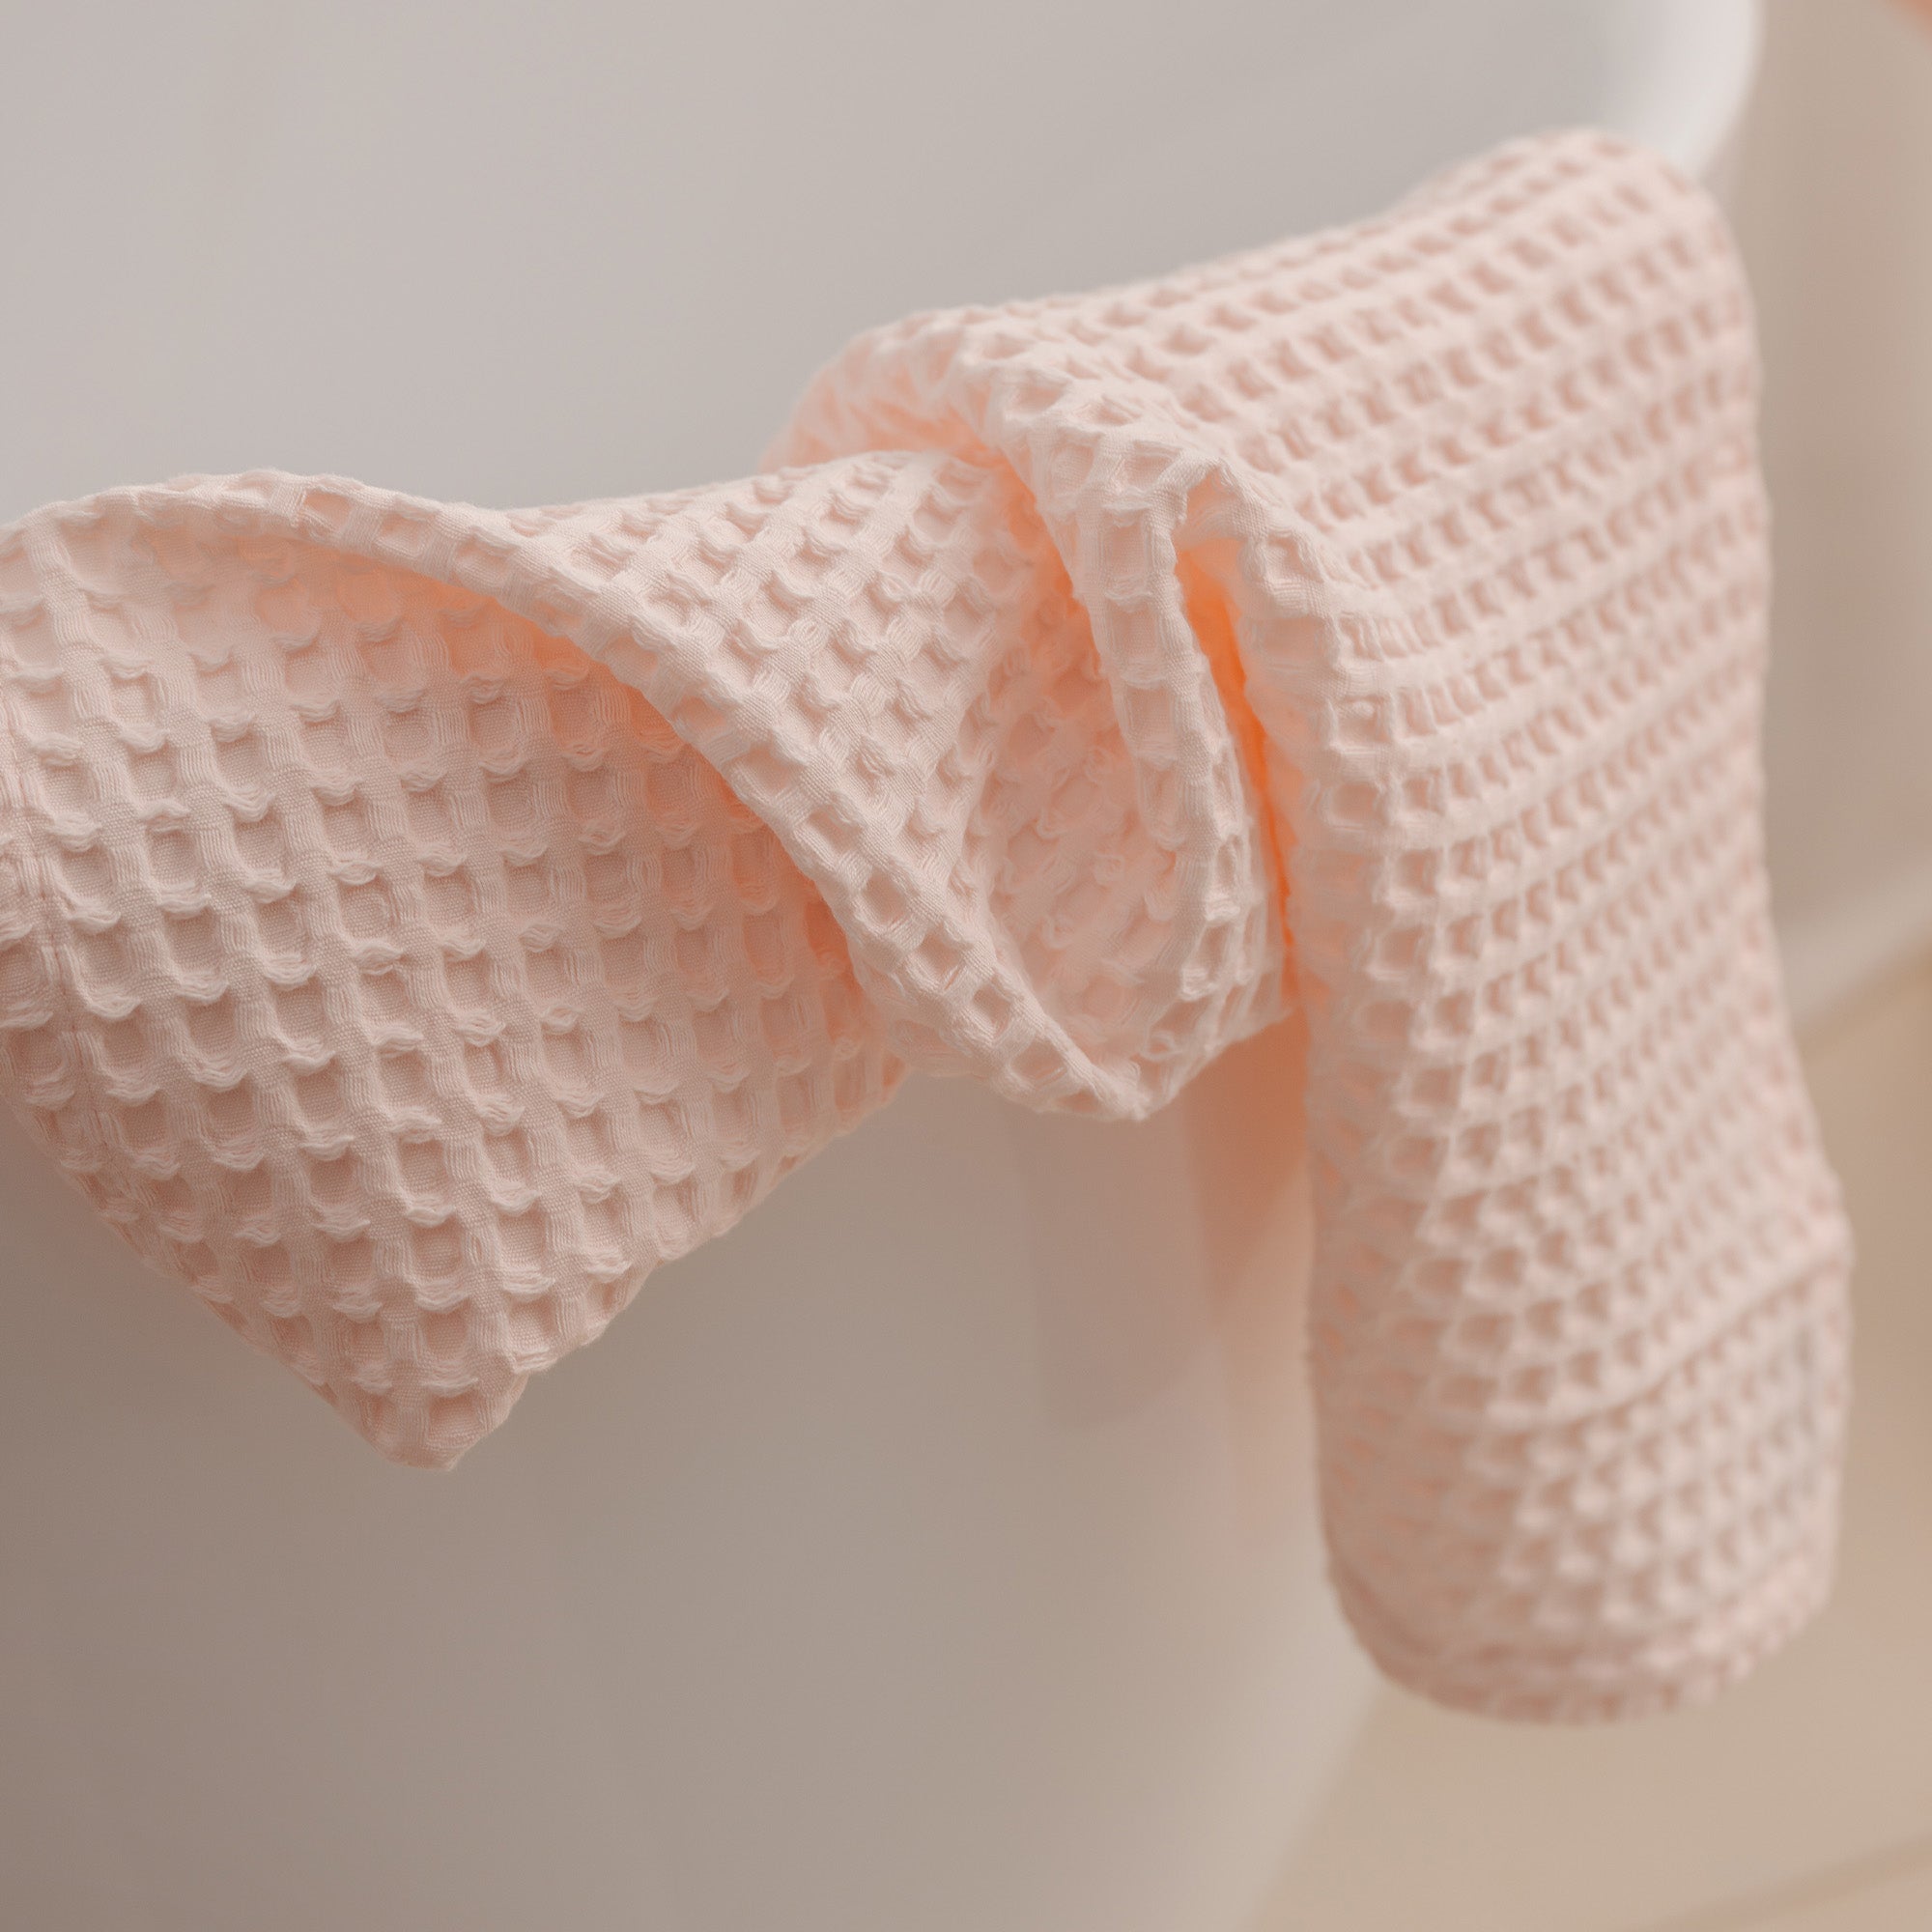 Honeycomb line shower towel